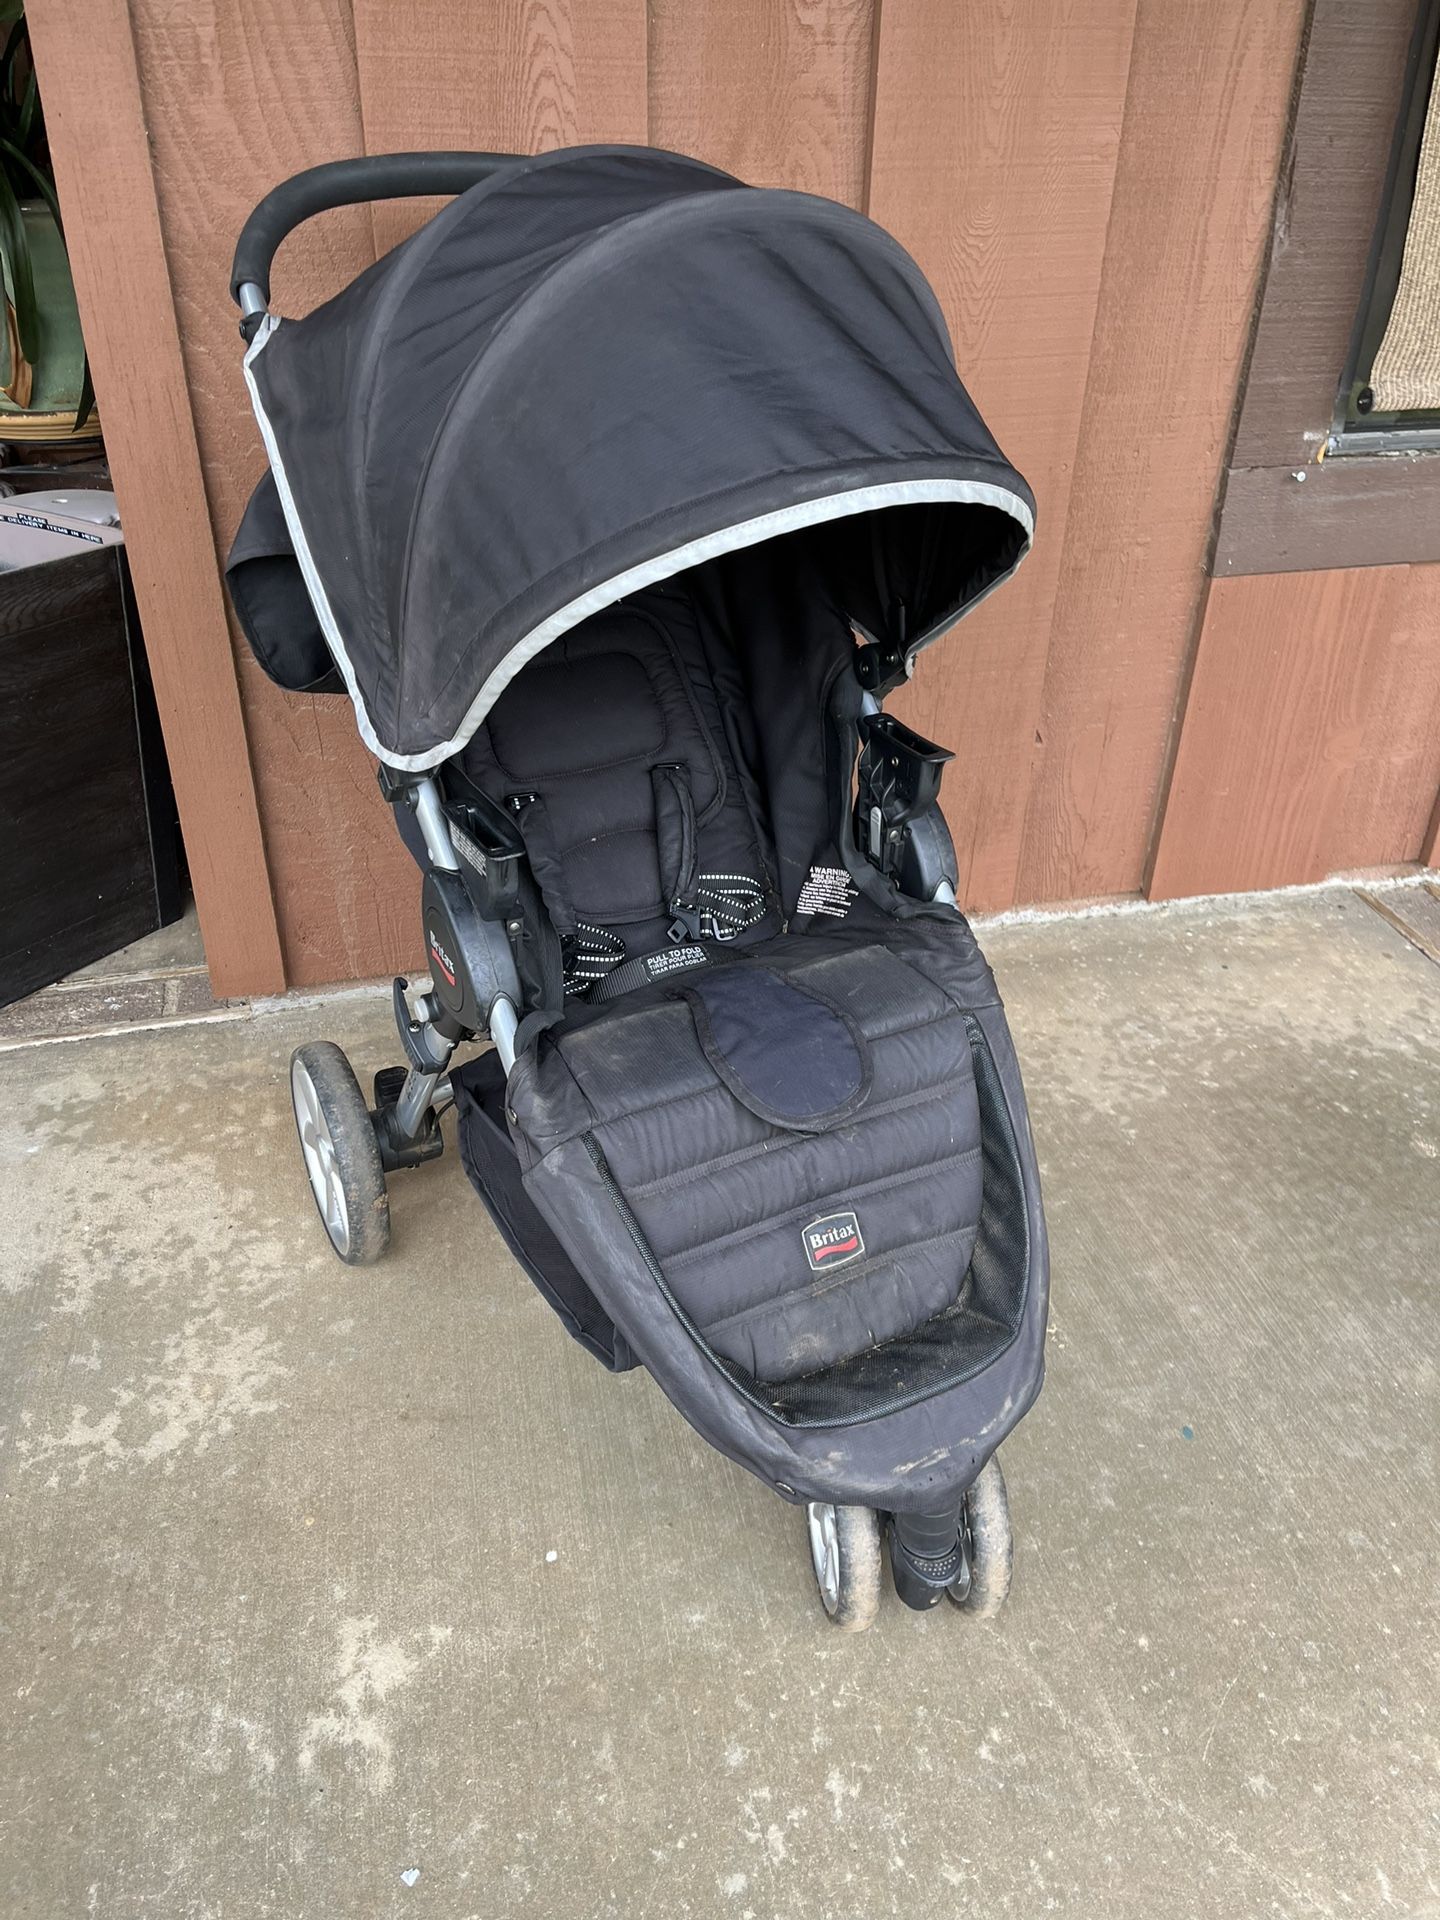 Britex stroller With Infant Car Seat Insert